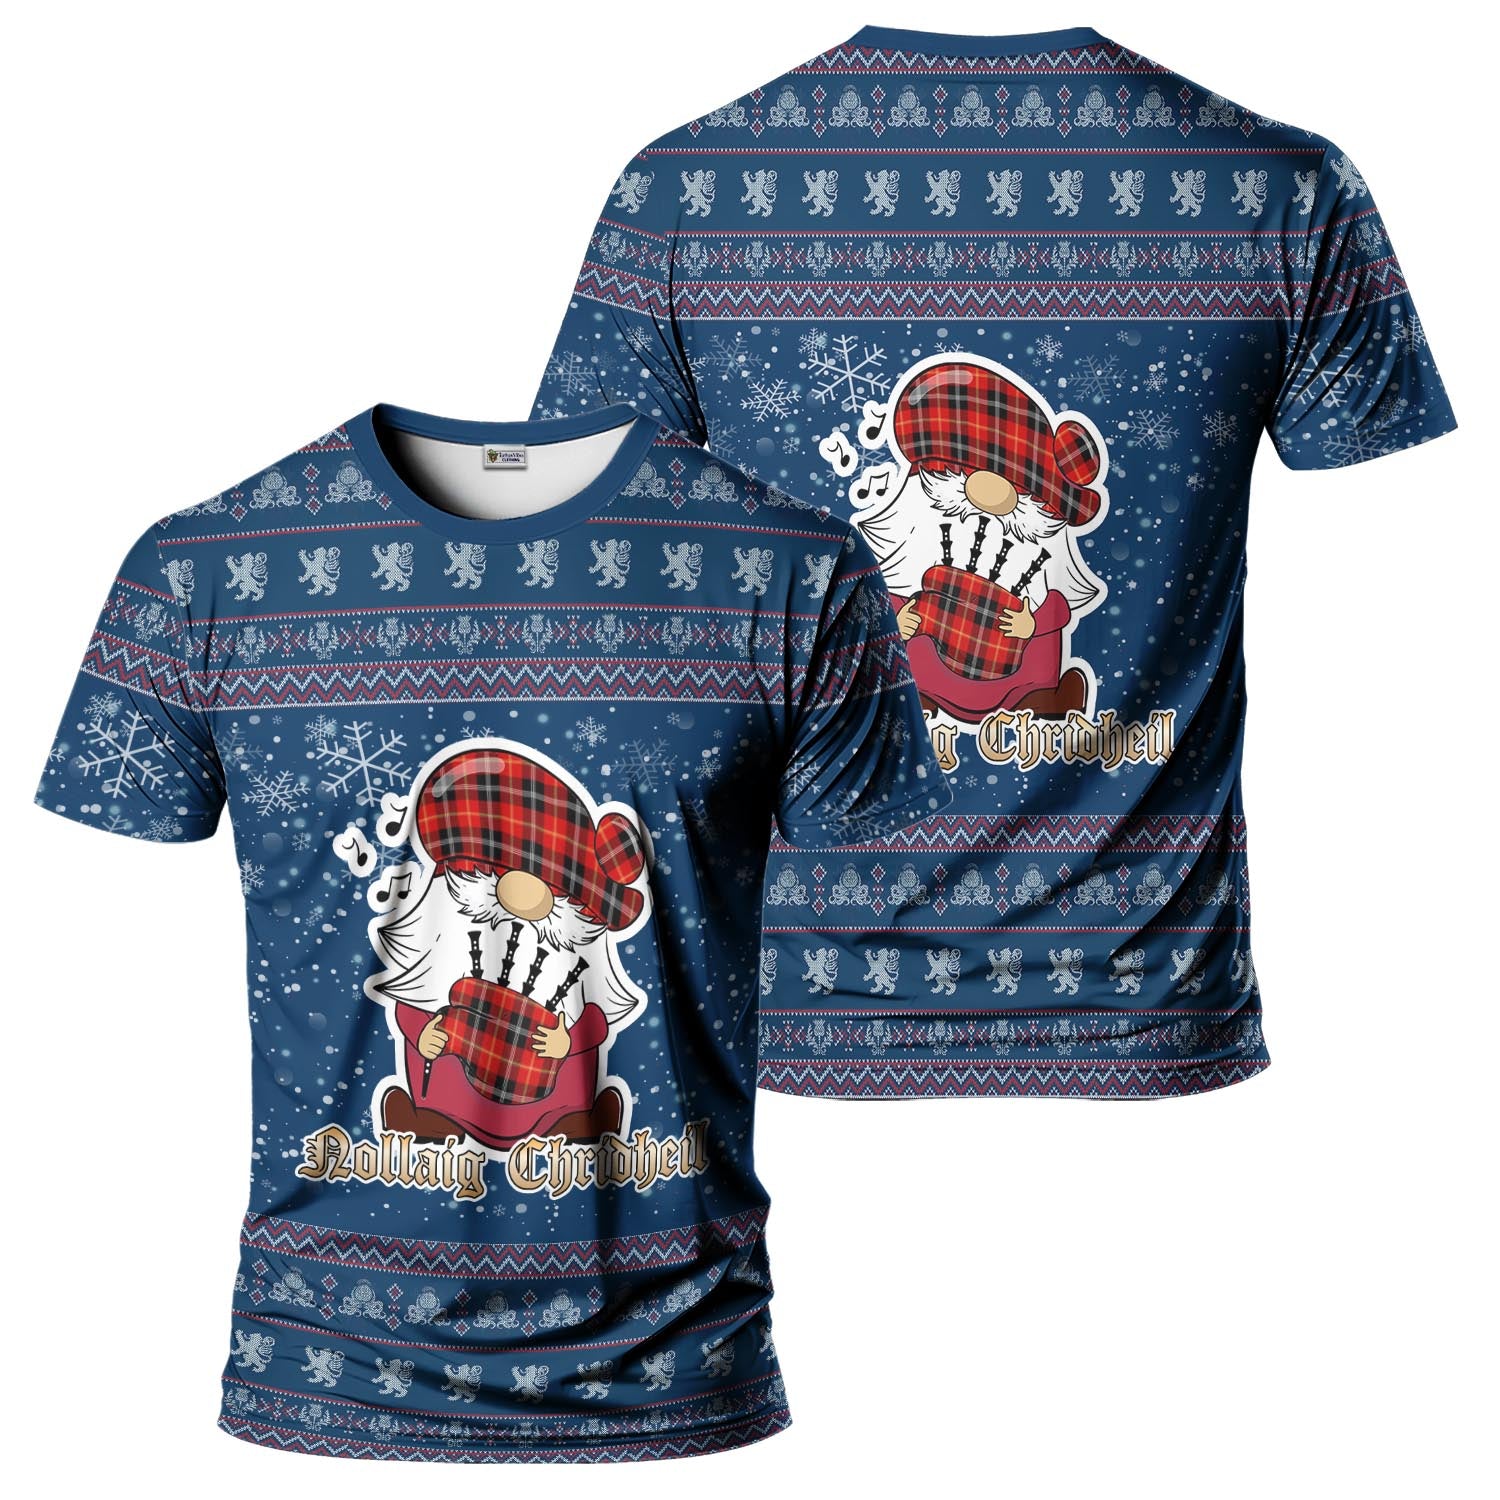 Majoribanks Clan Christmas Family T-Shirt with Funny Gnome Playing Bagpipes Kid's Shirt Blue - Tartanvibesclothing